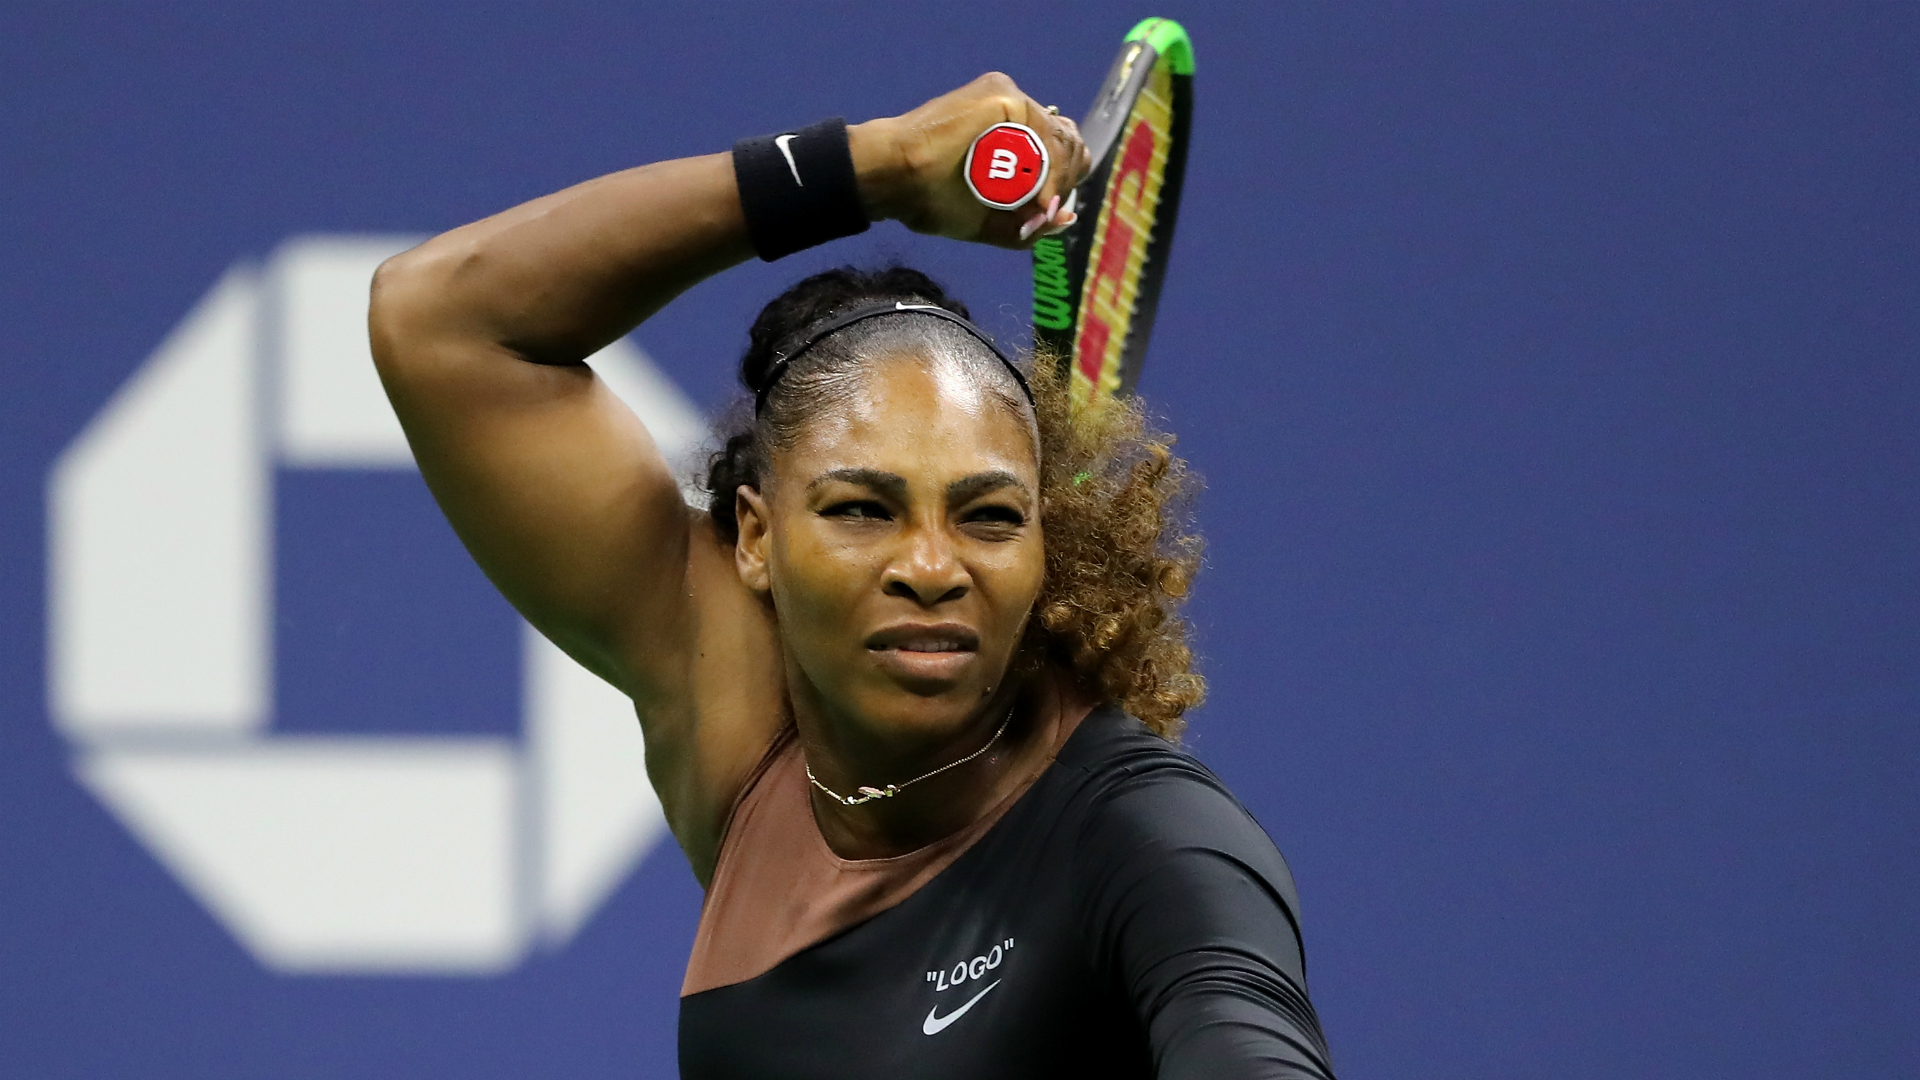 US Open 2018: Serena Williams blitzes sister Venus in straight sets | Sporting News1920 x 1080